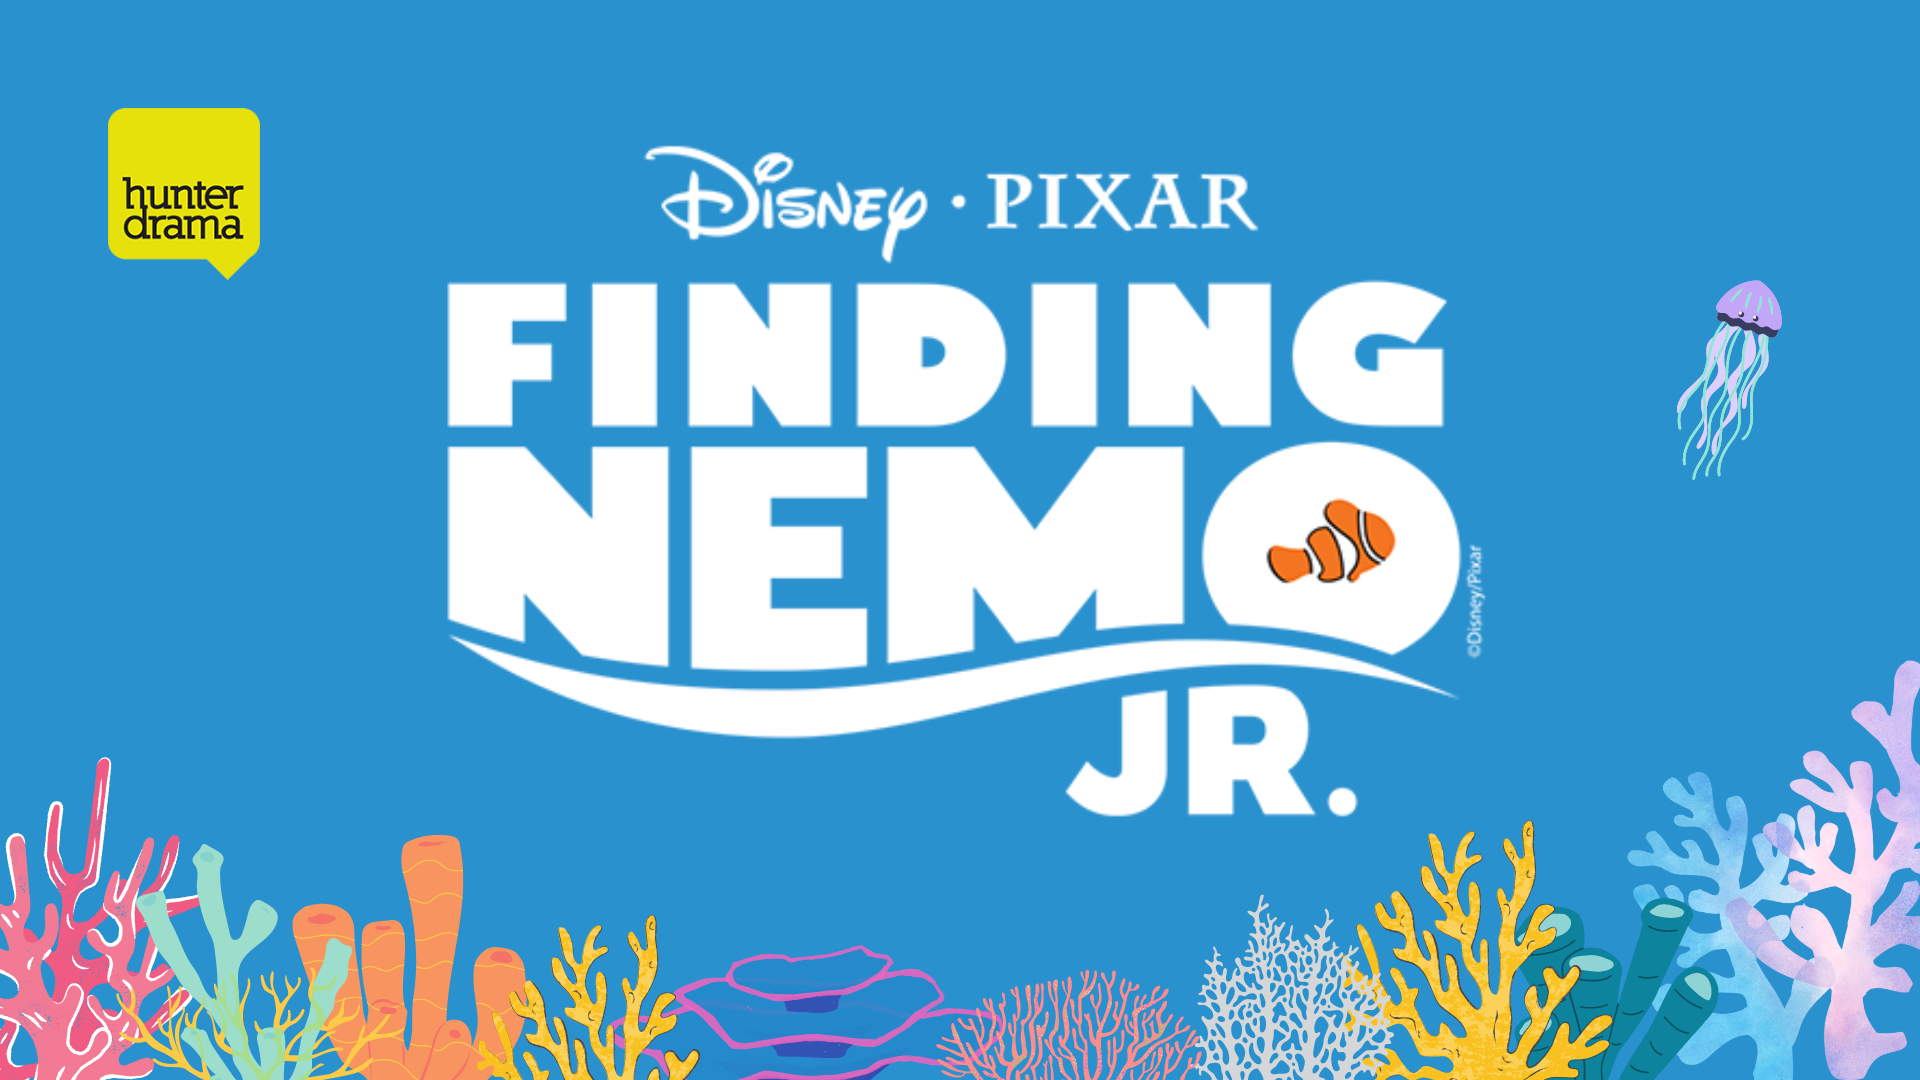 disney's finding nemo jr.